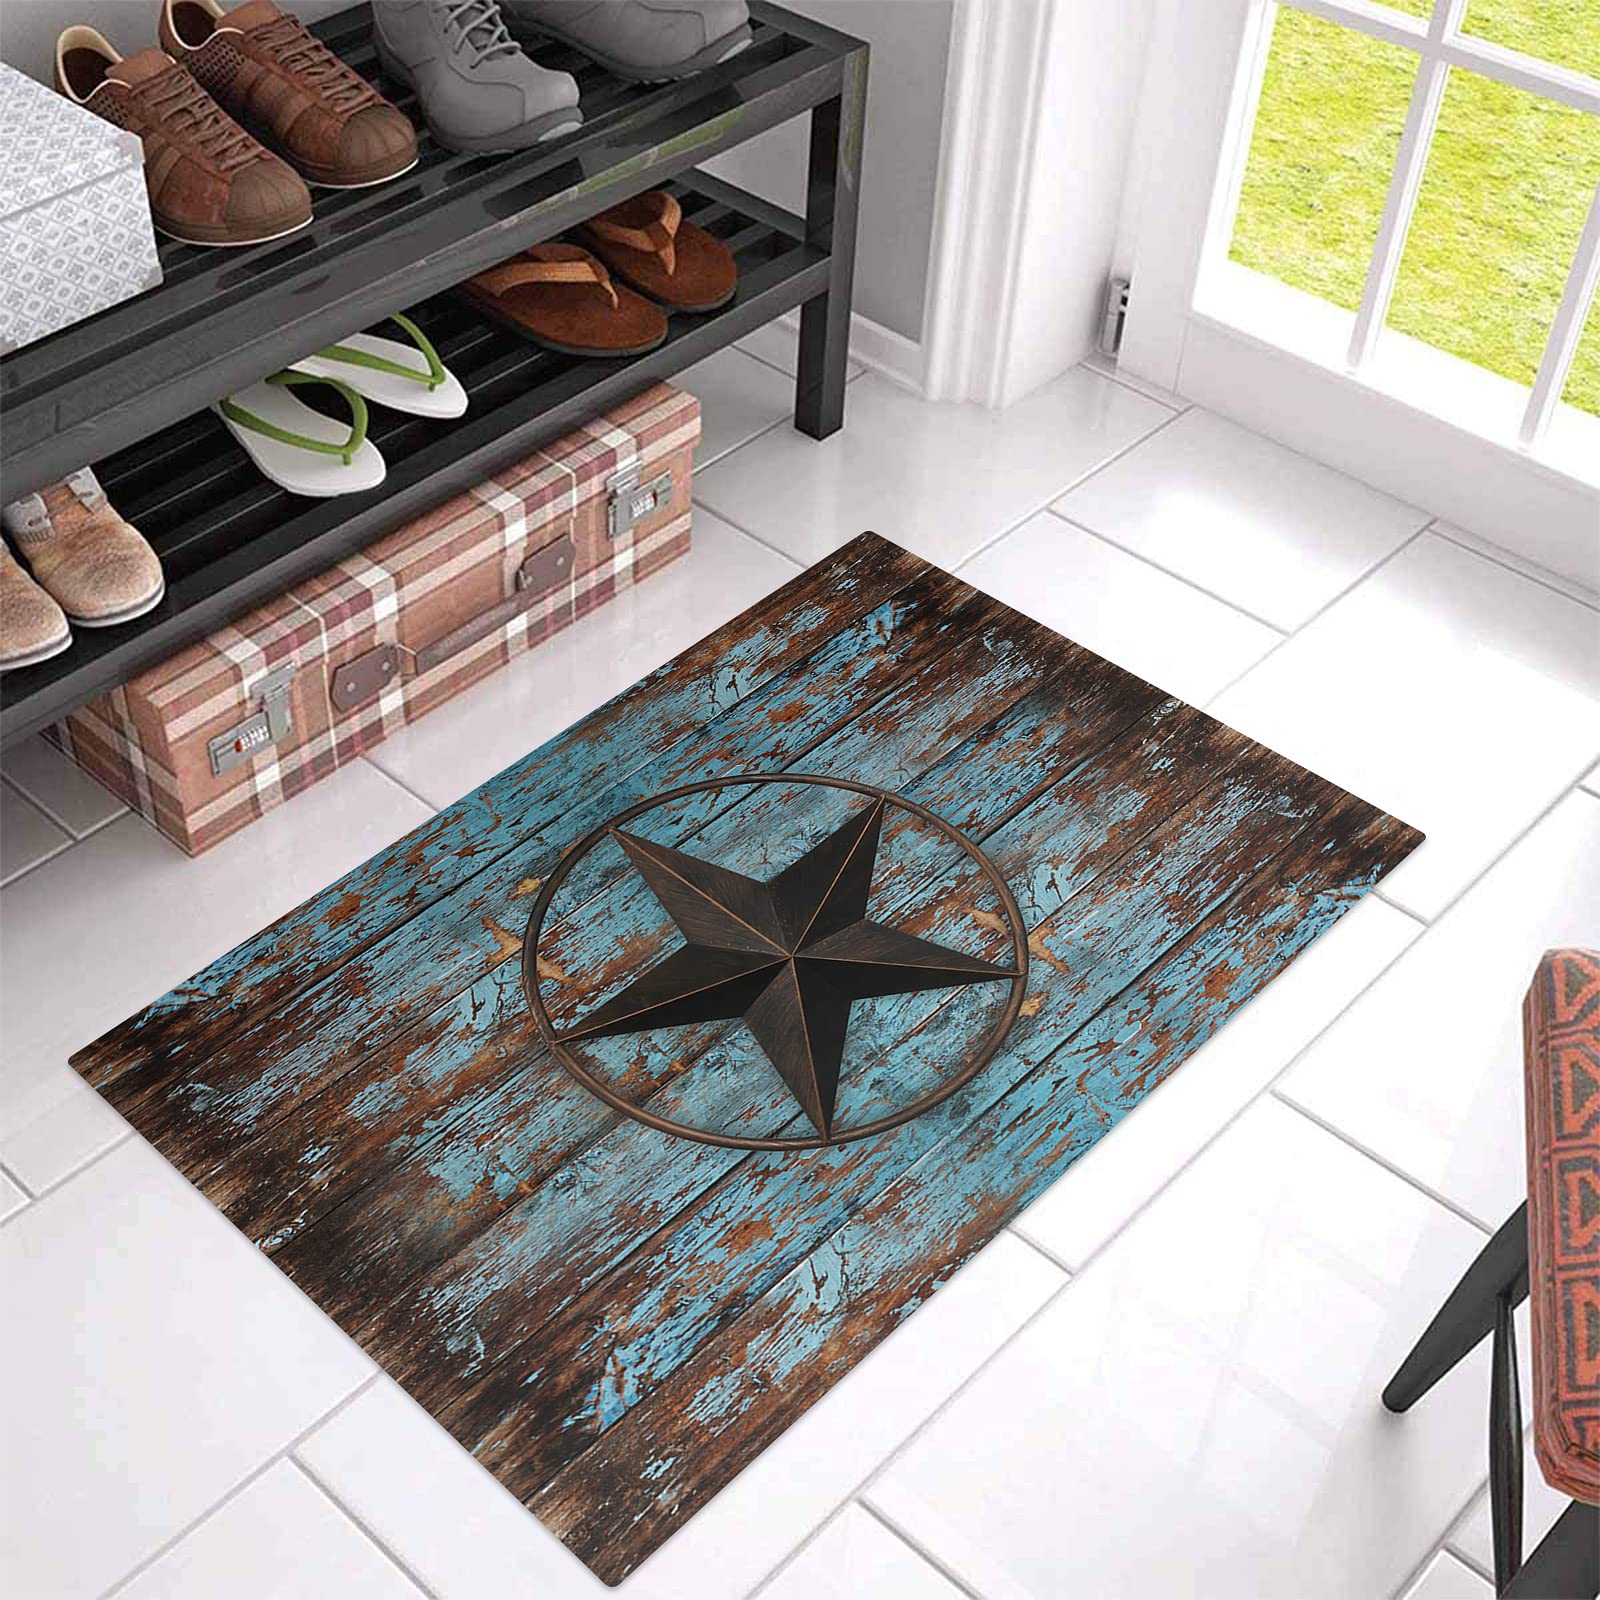 Welcome Doormat Western Country Star Texas Vintage Blue Wood Board,Non Slip Indoor Floor Mat Bath Rug,Rustic Wooden Grain Entrance Carpet for Bedroom Kitchen Living Room Bathroom Decor 16x24In